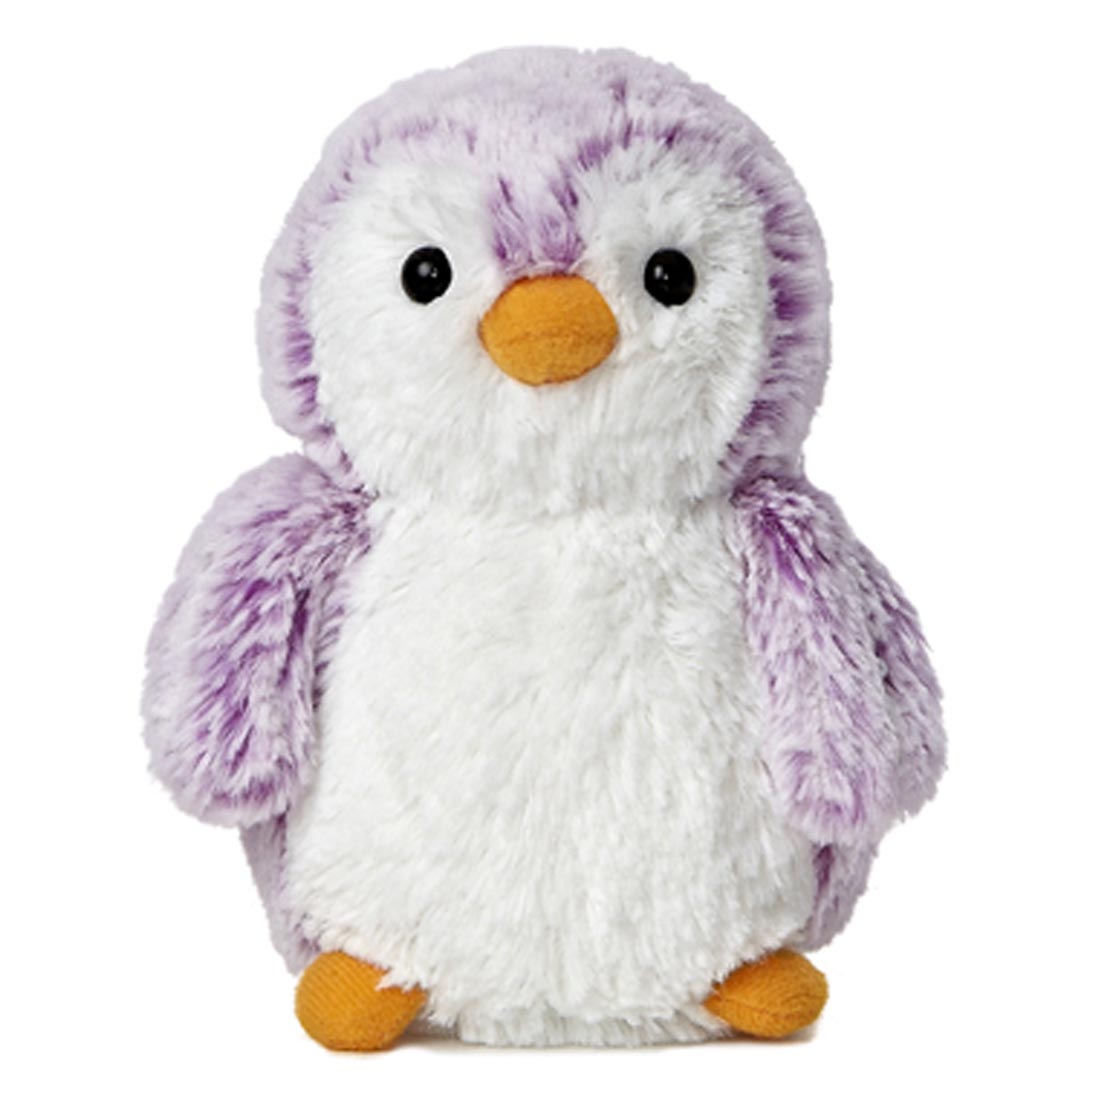 light violet and white stuffed penguin